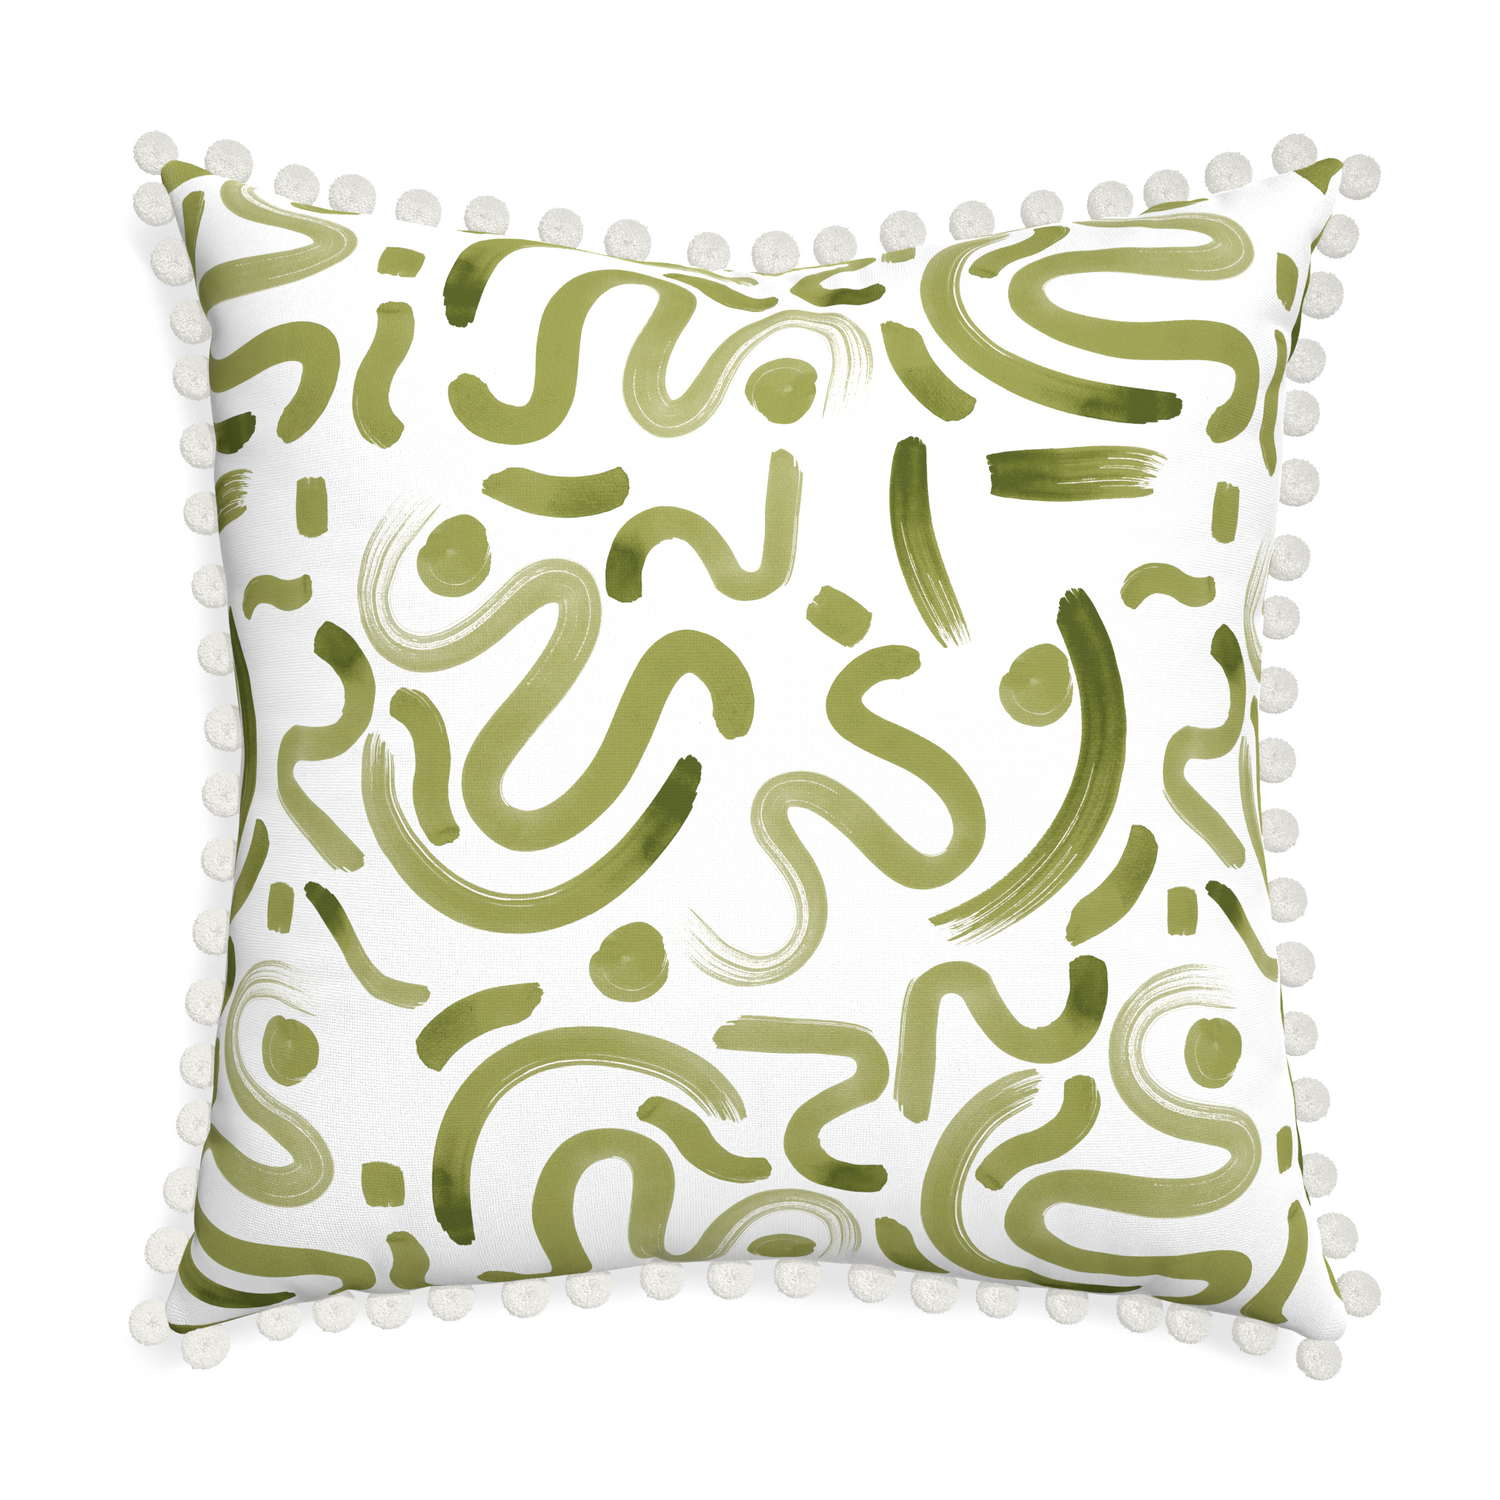 Euro-sham hockney moss custom pillow with snow pom pom on white background